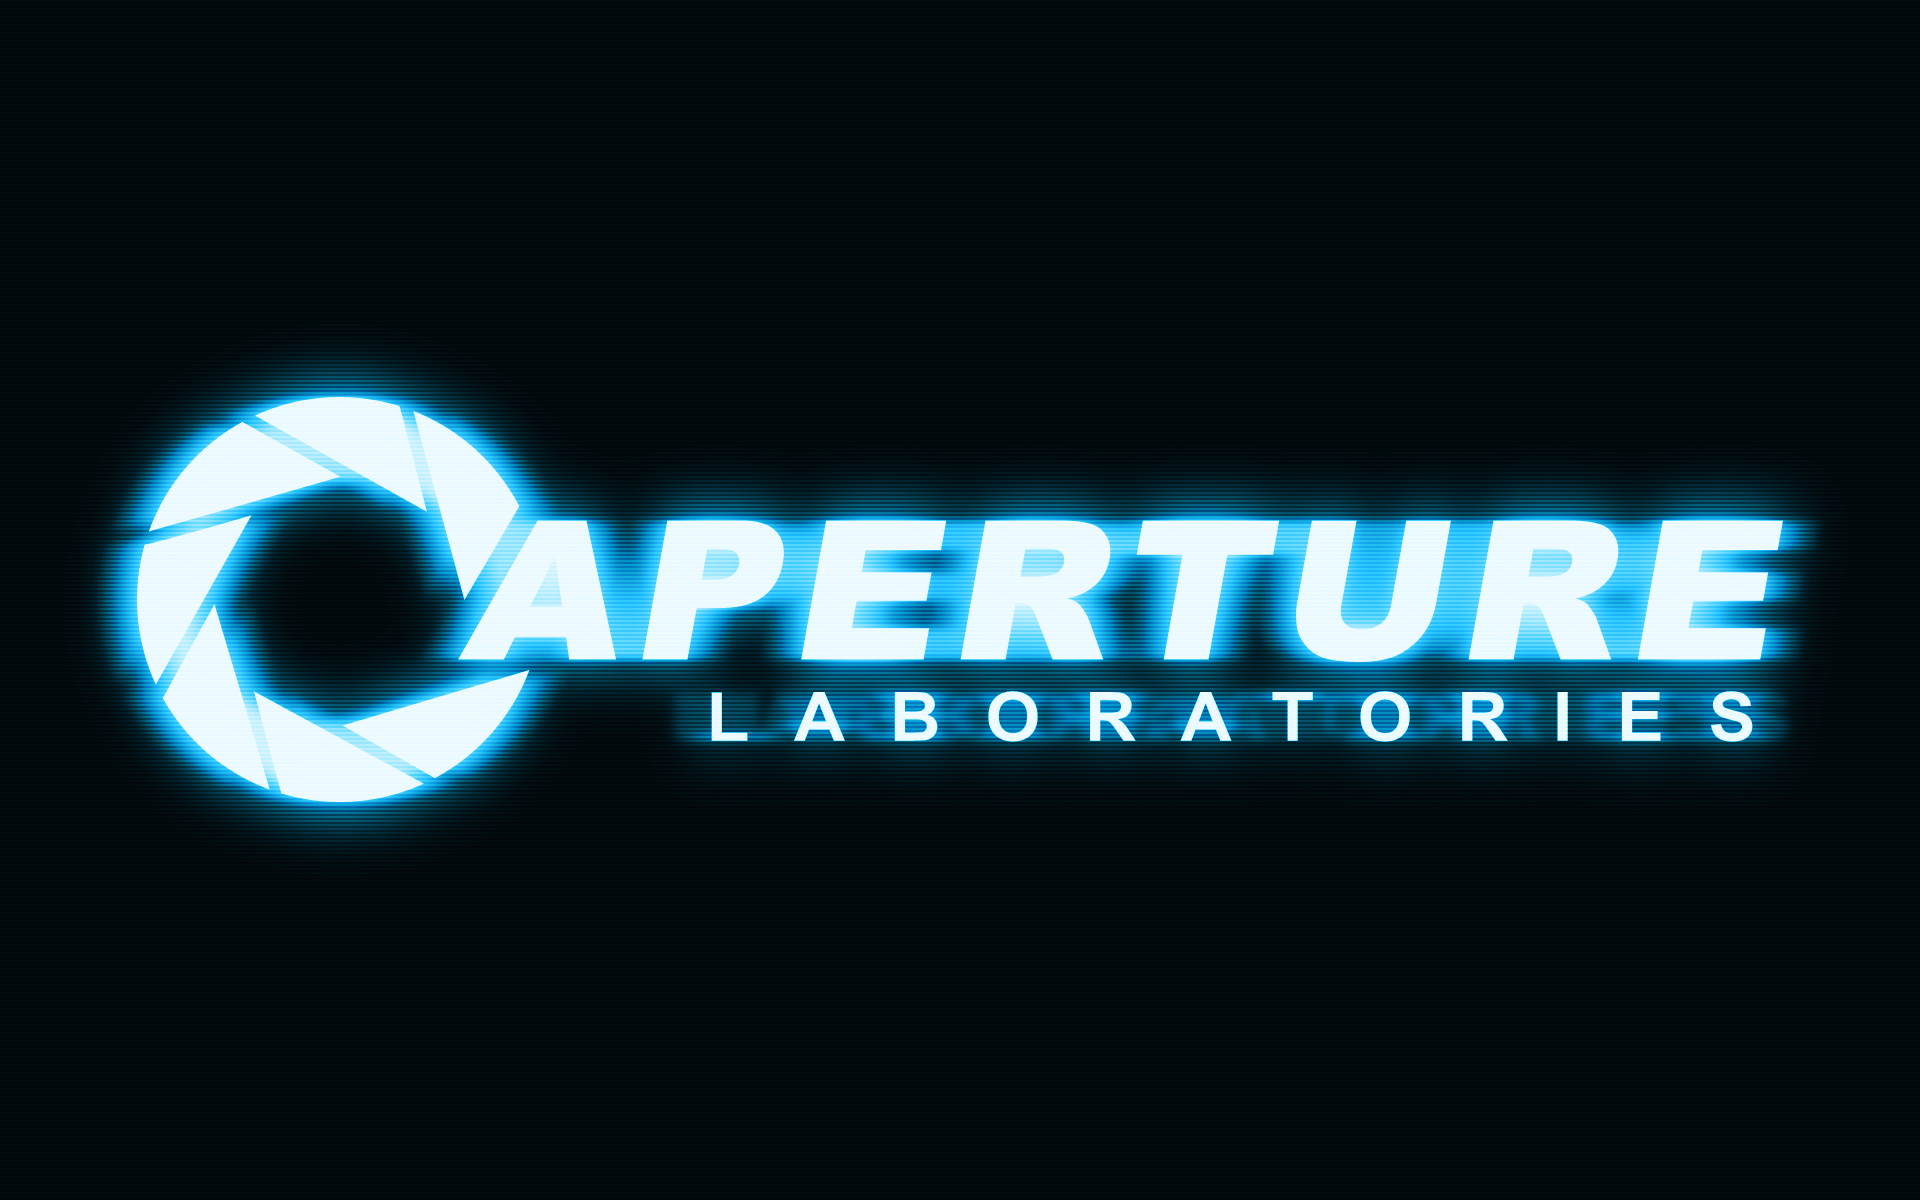 Valve Corporation, Portal, Aperture Laboratories, logos - desktop wallpaper